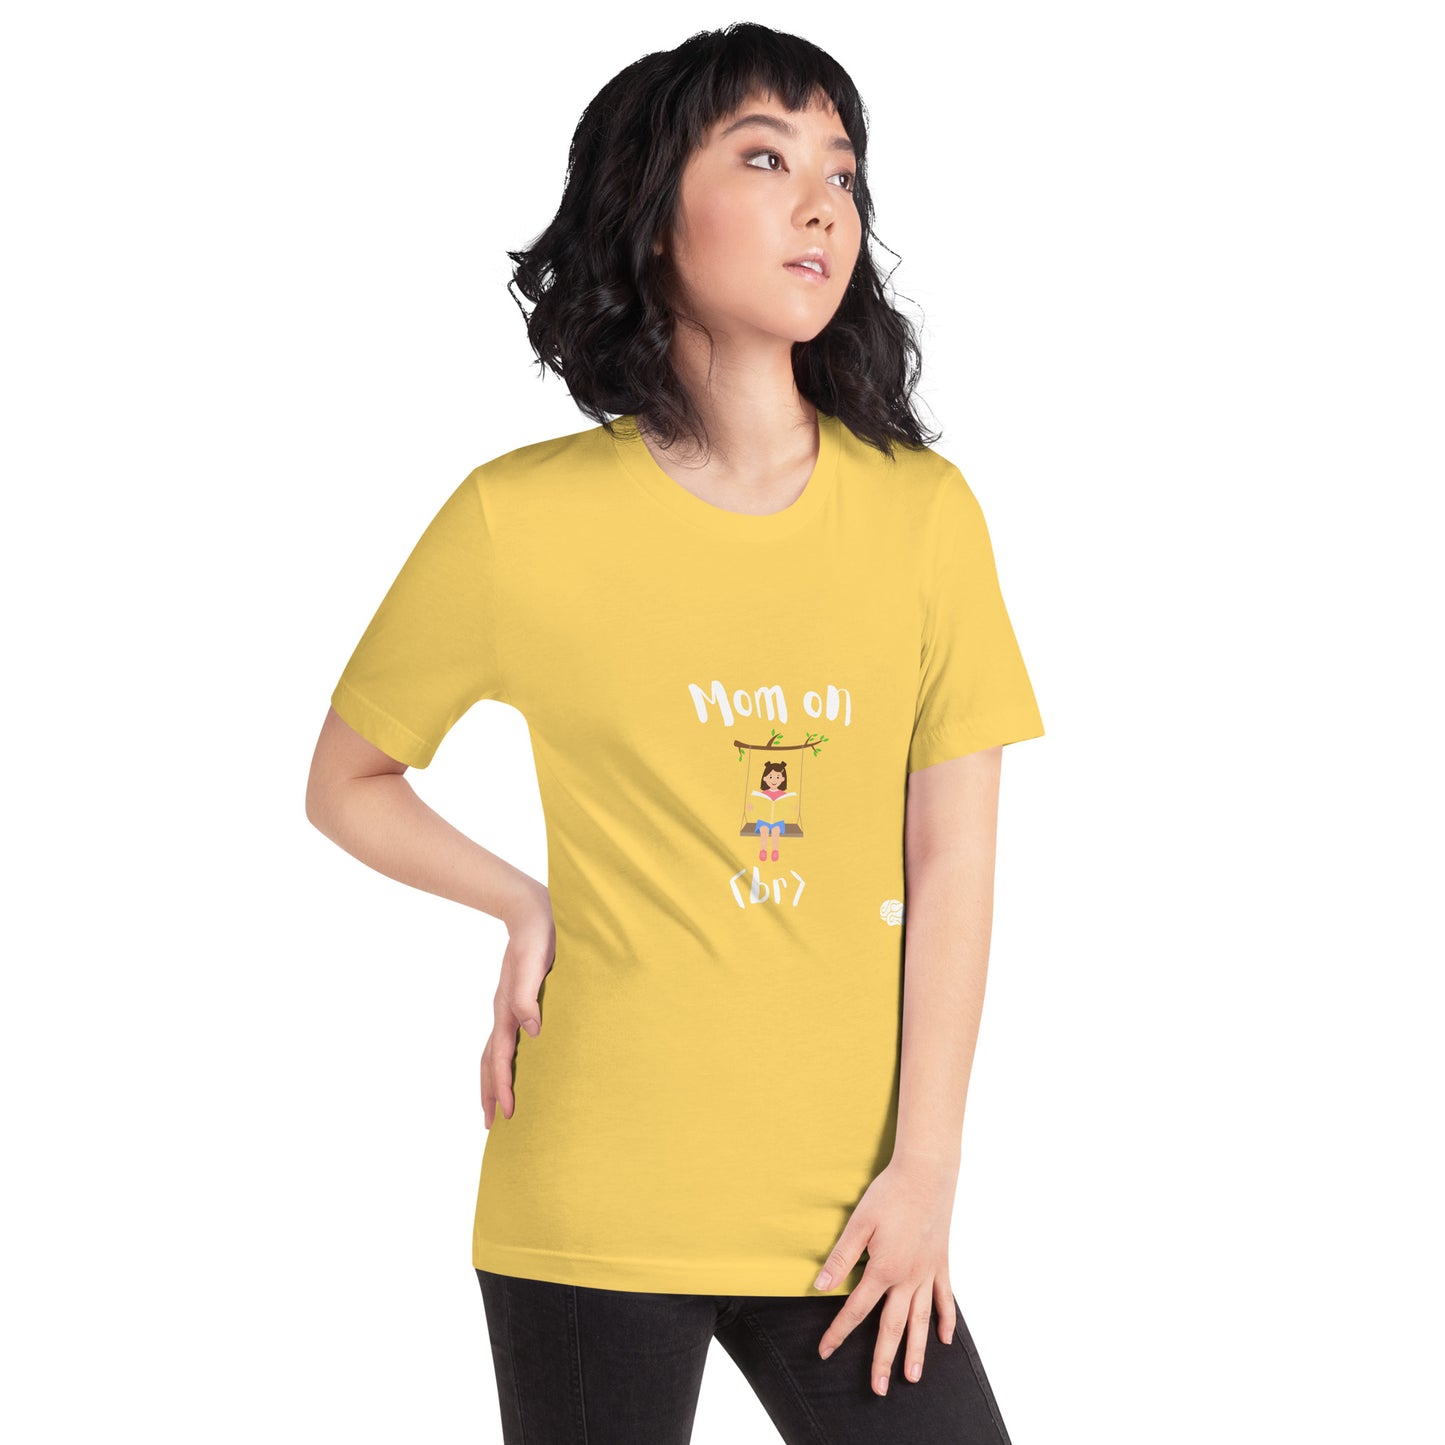 Coding - Mom on <br> (Women's T-shirt)